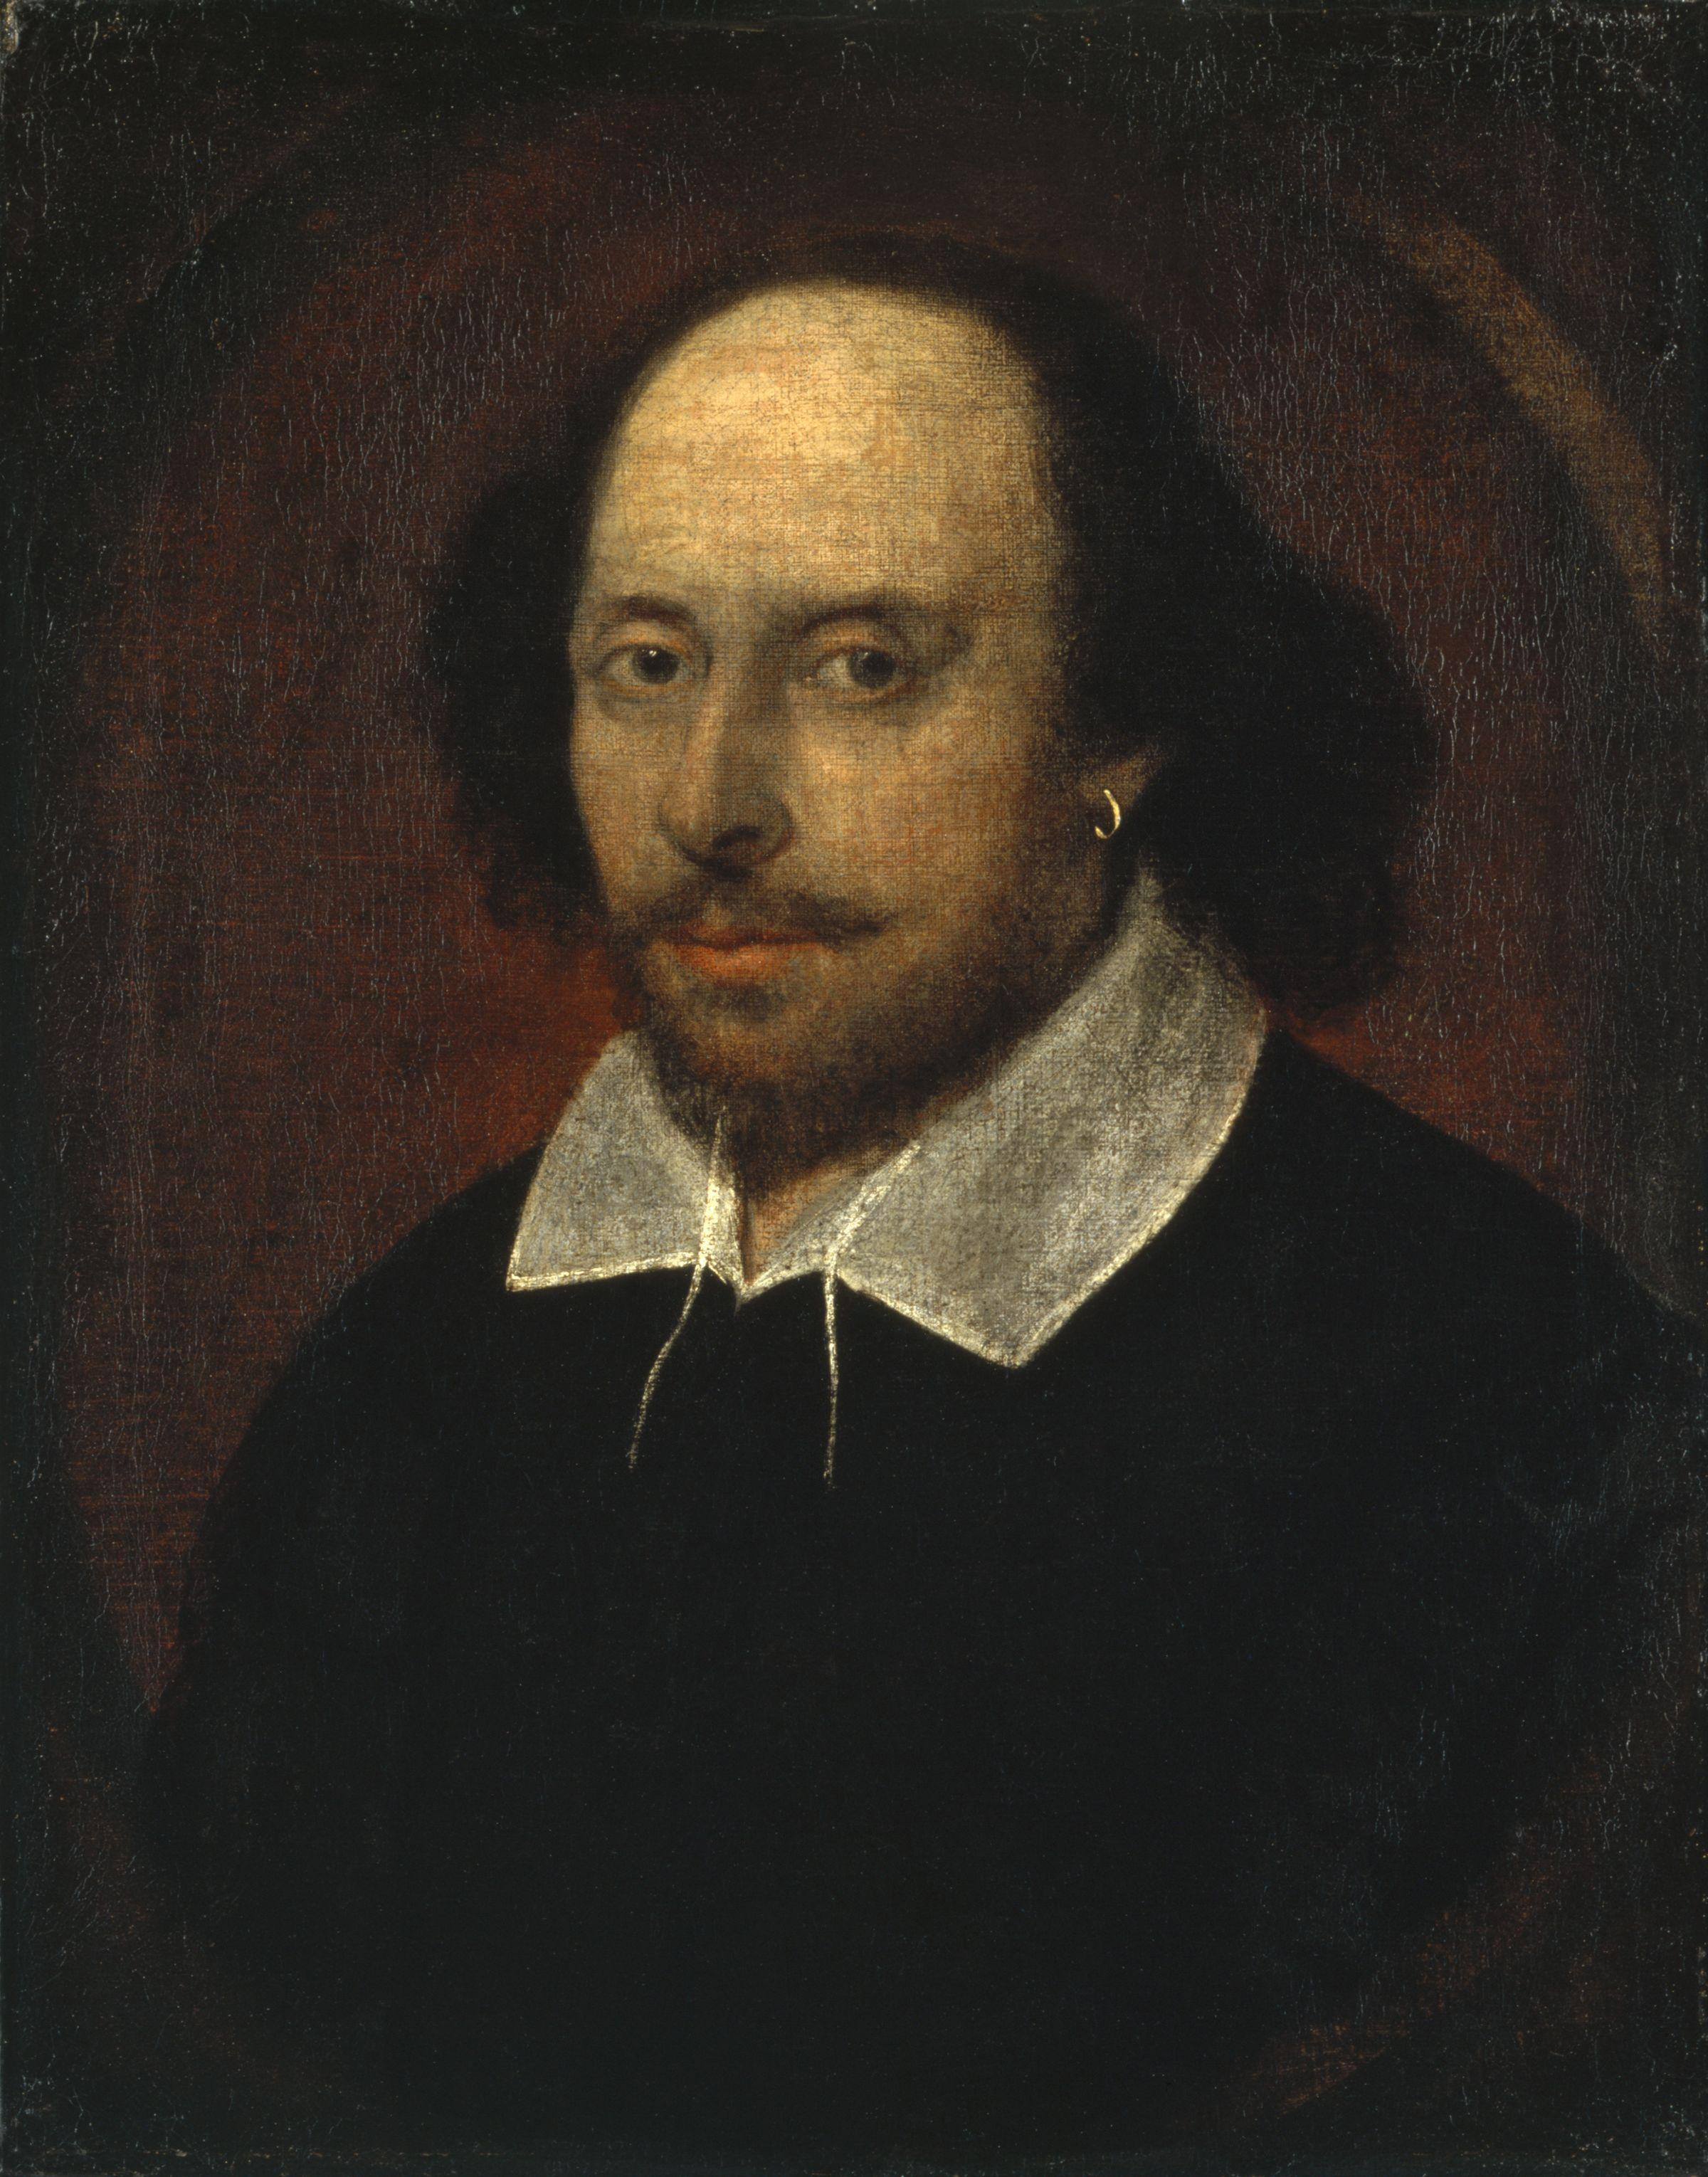 Religious views of William Shakespeare - Wikipedia